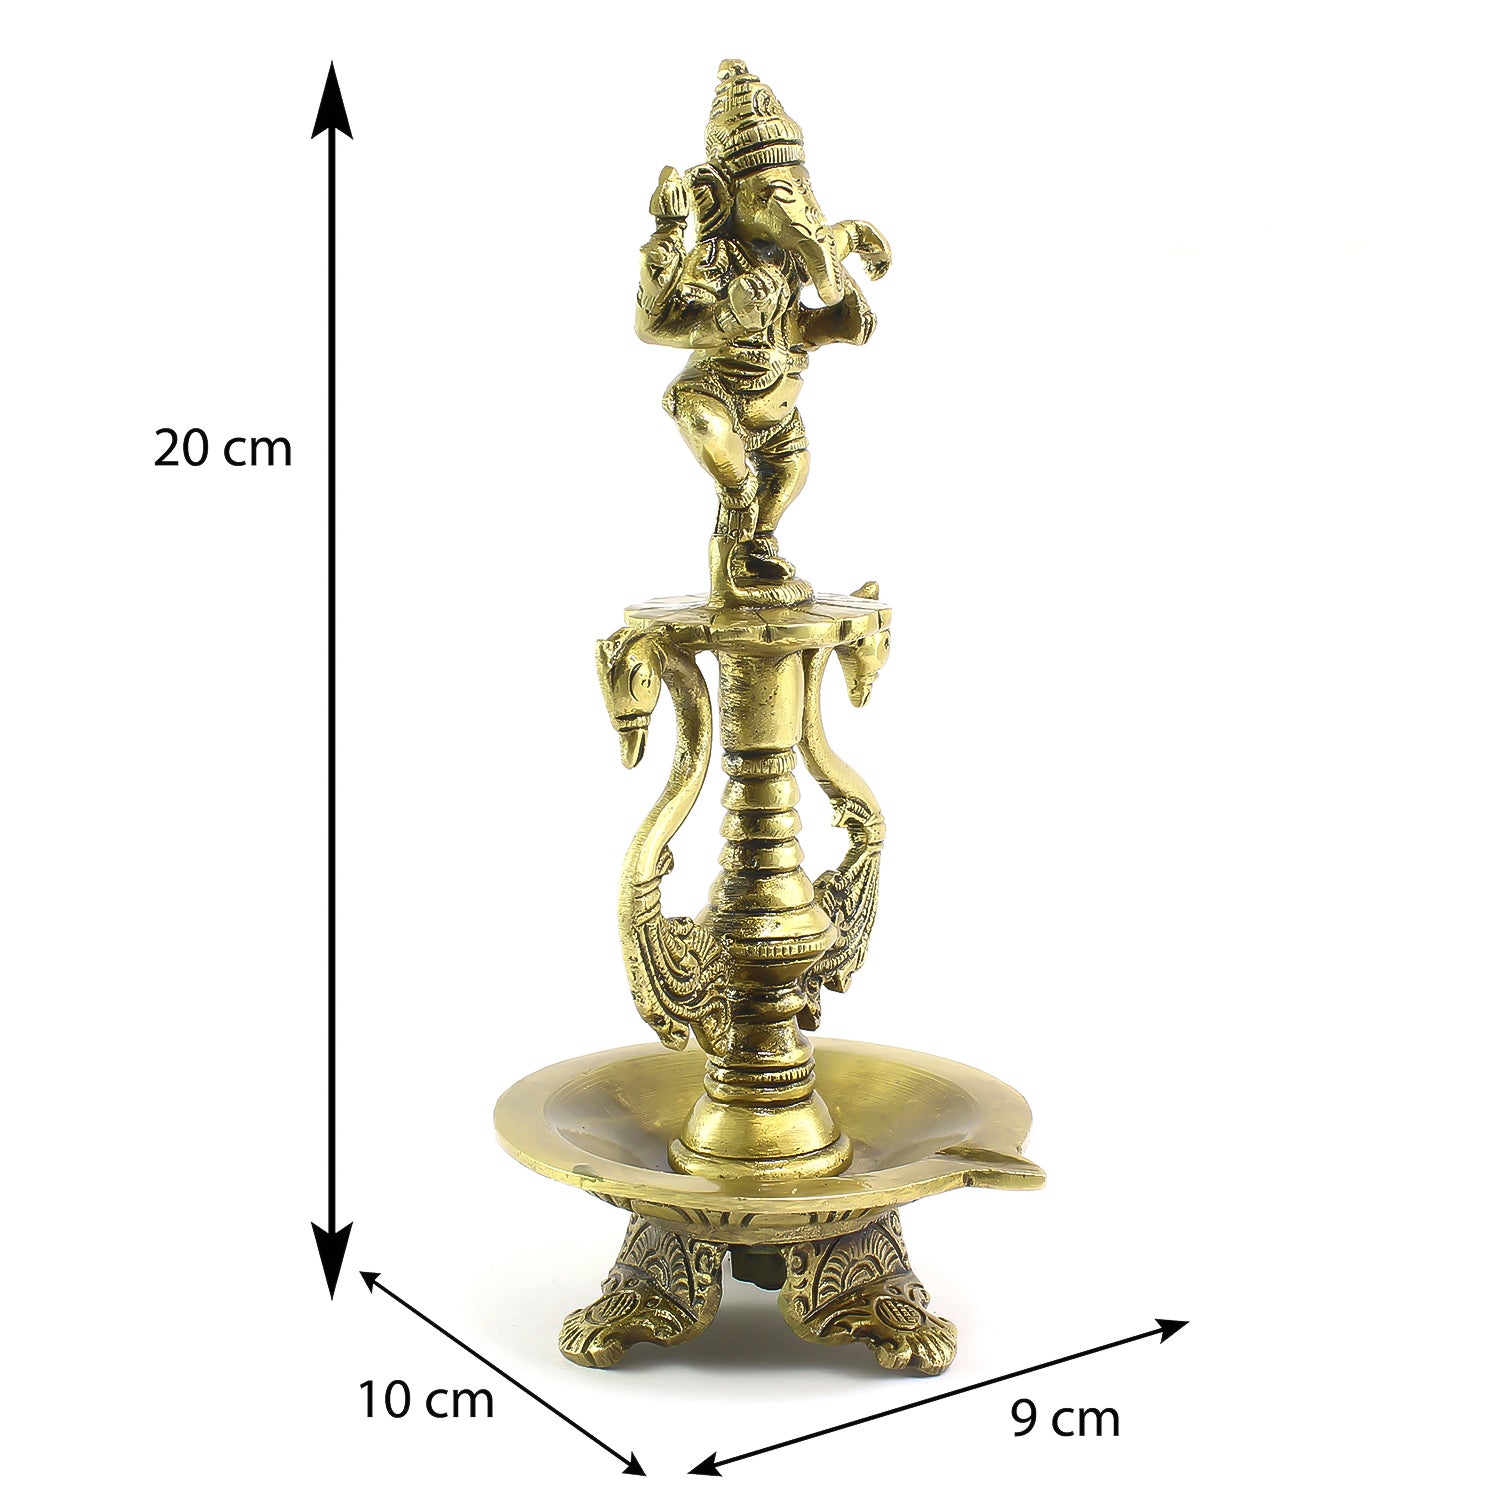 Golden Brass Diya with Lord Ganesha Idol and Peacock Design Stand 2